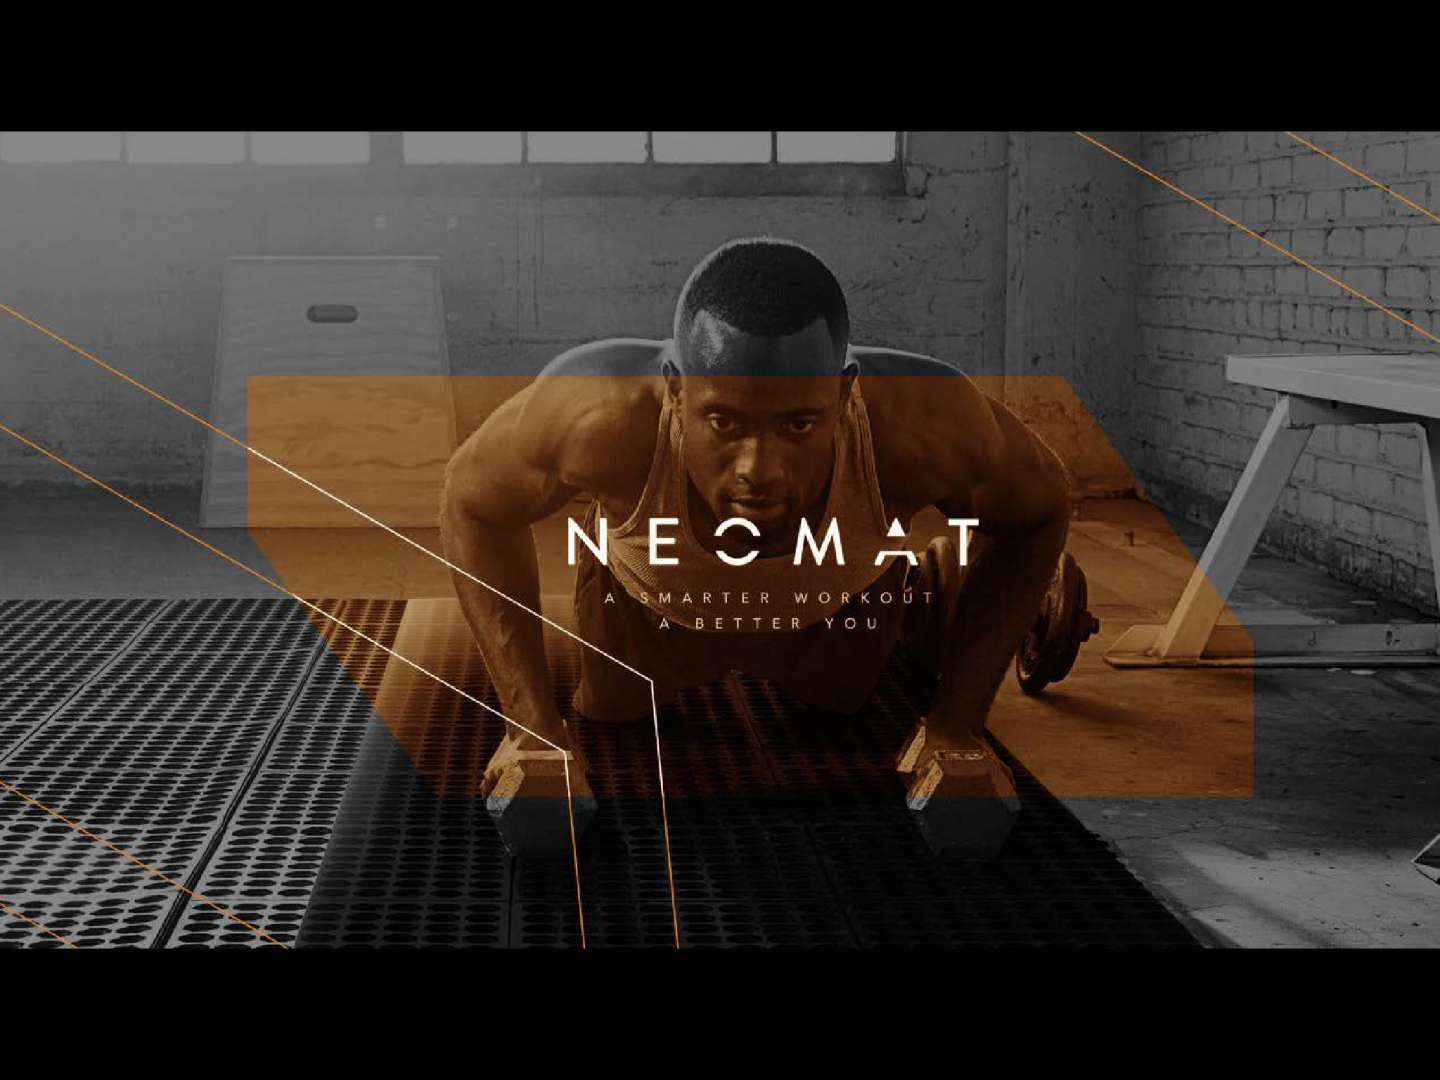 NEOMAT - A Smarter Workout